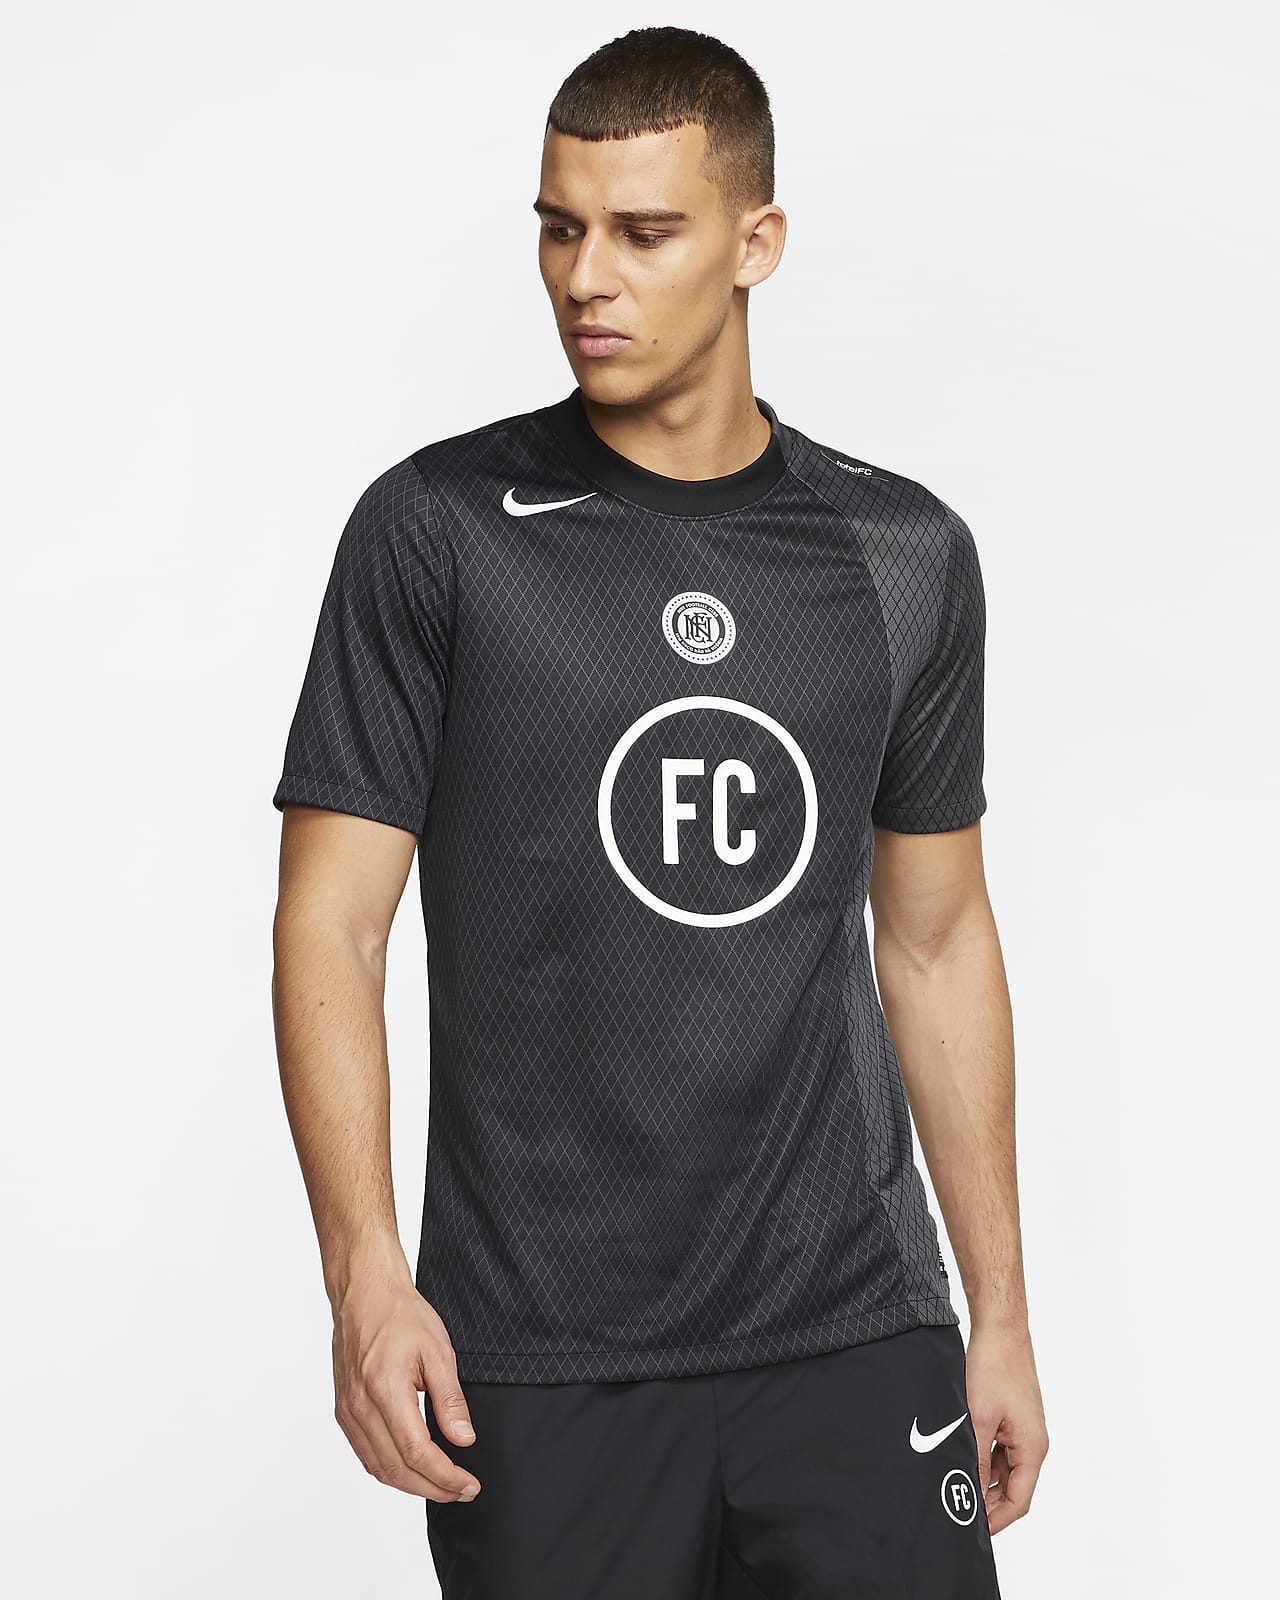 Nike F.C. Away Men's Football Shirt 